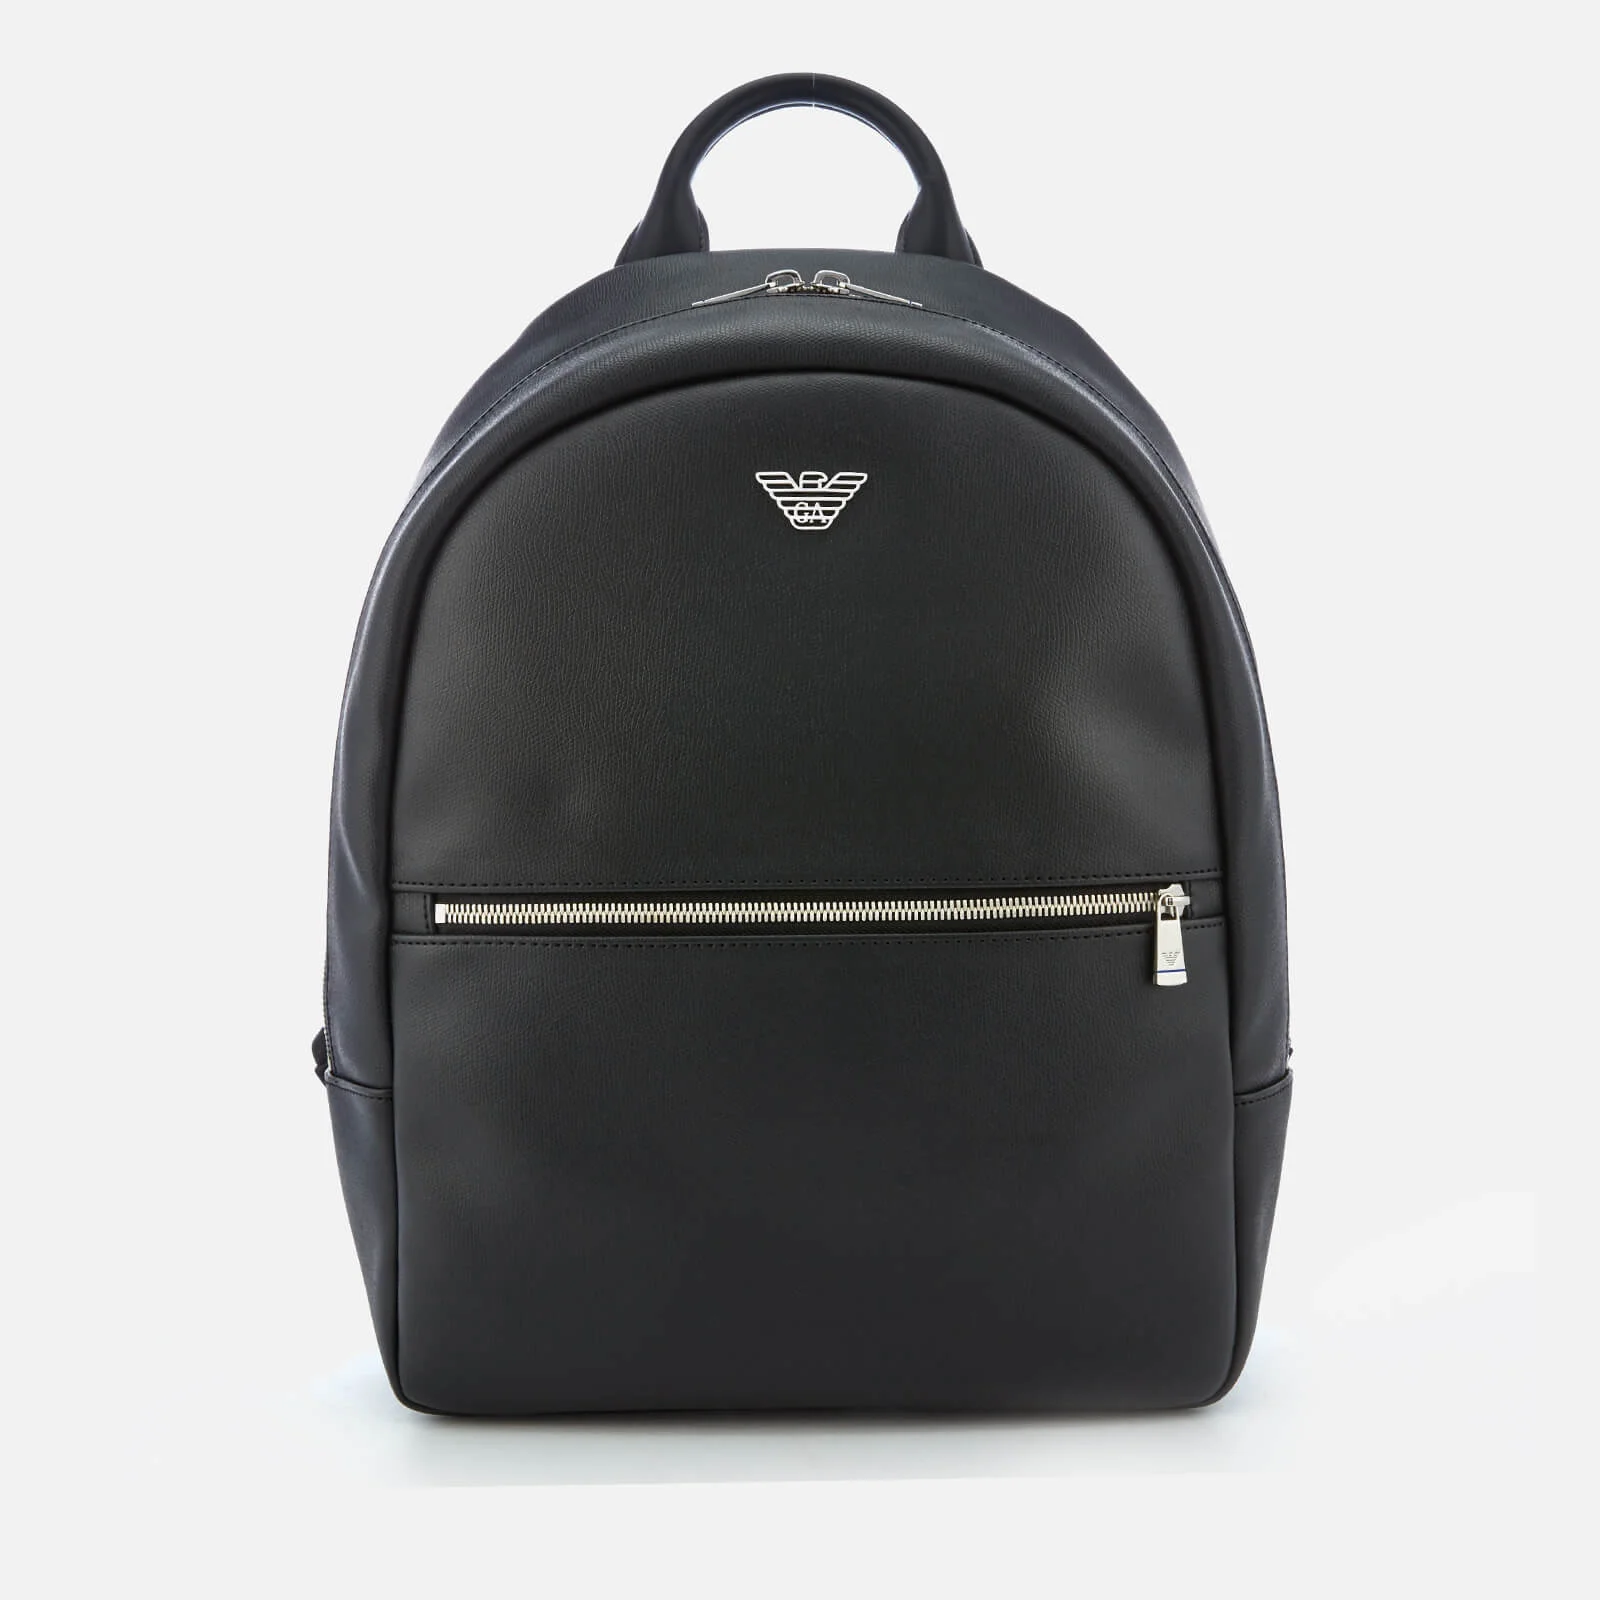 Emporio Armani Men's Backpack - Black Image 1